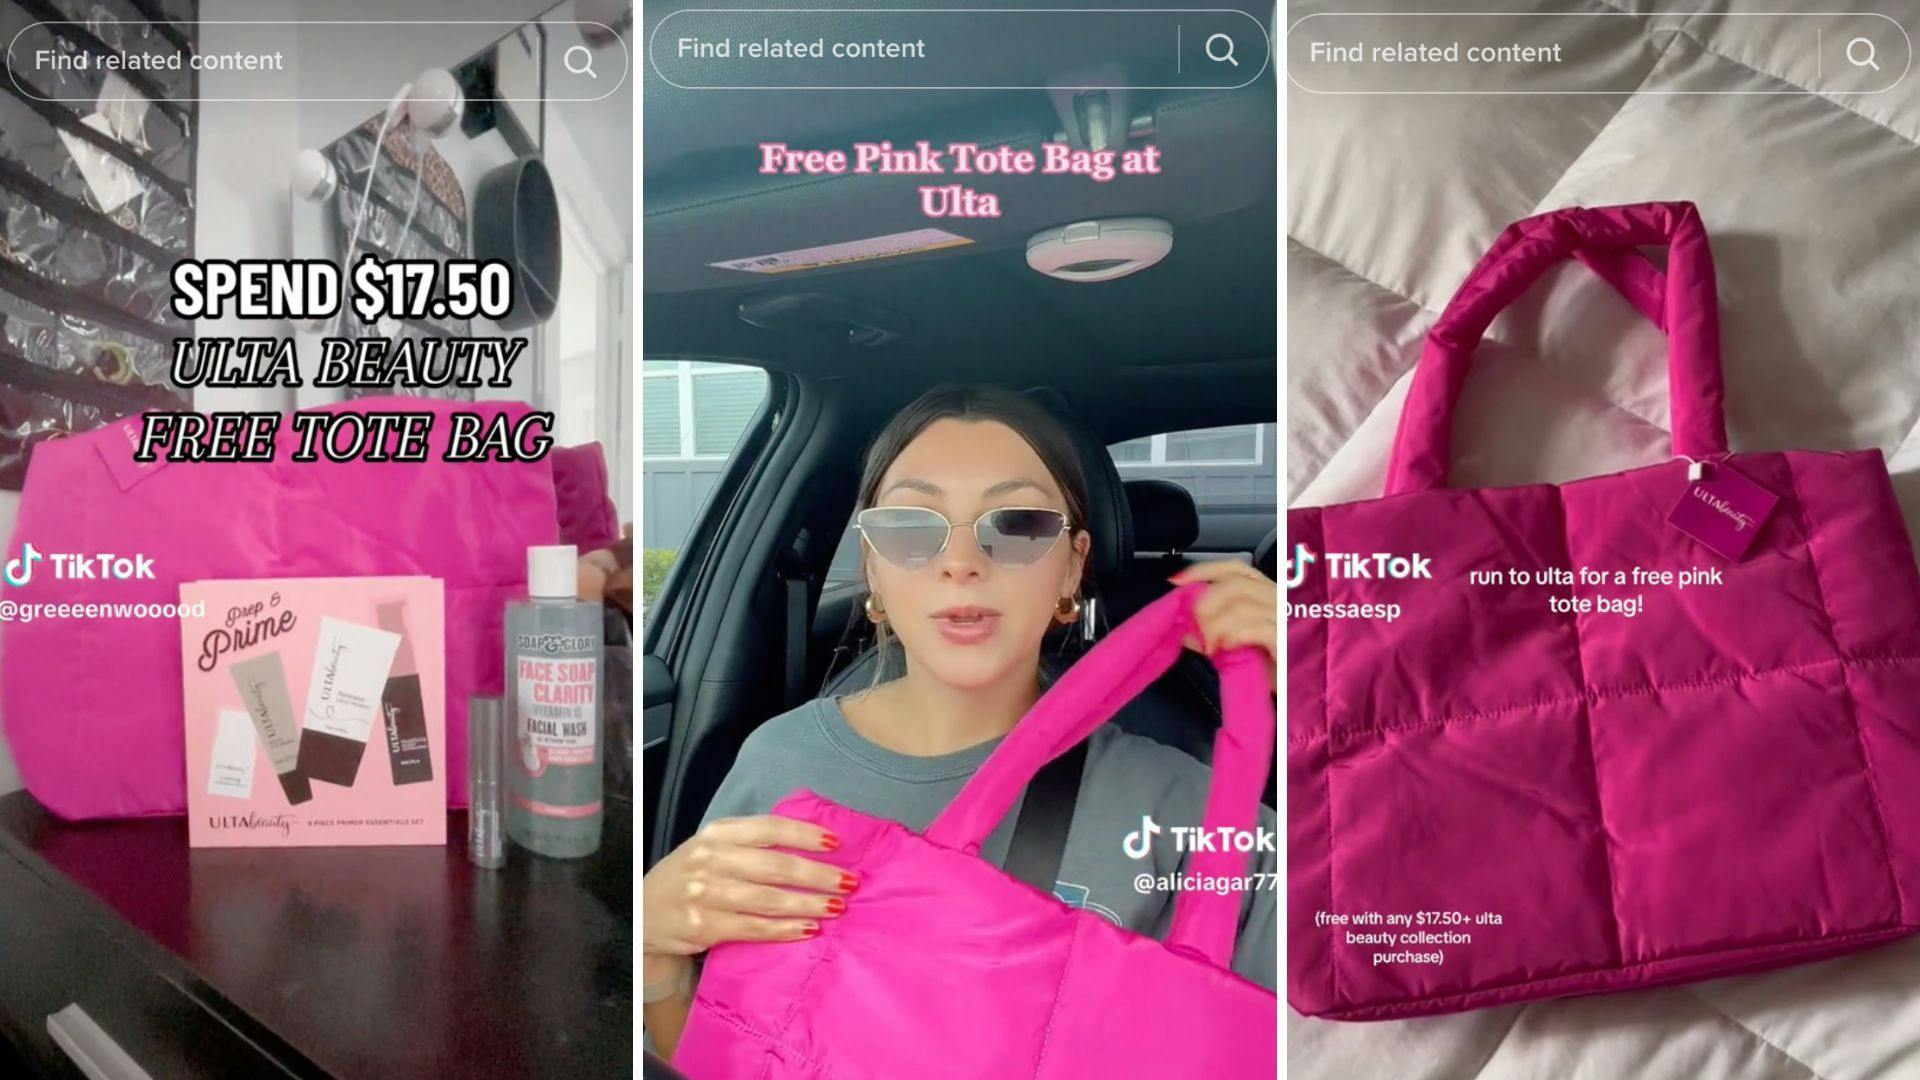 images of people on TikTok talking about free pink Ulta bag